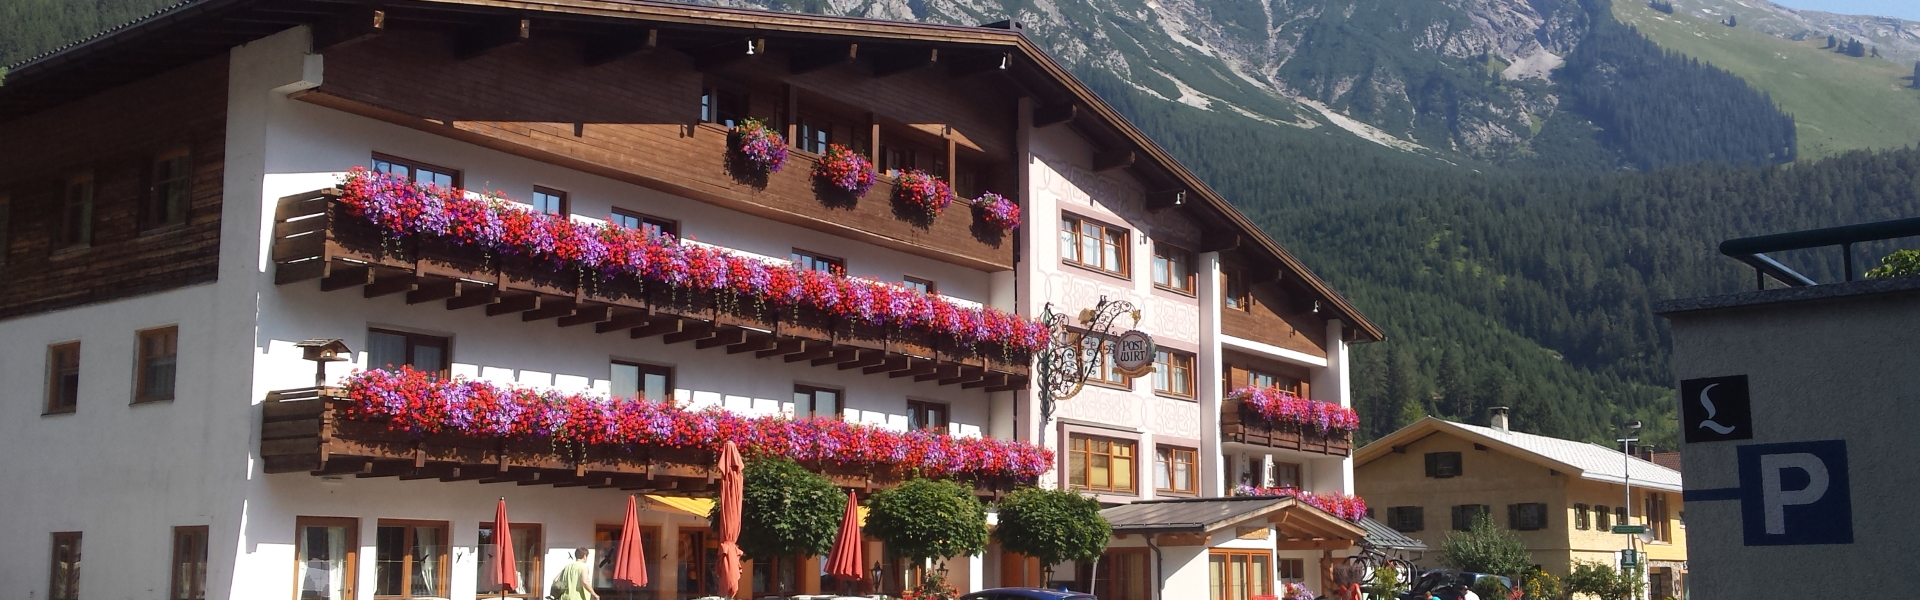 Flowers on balconies in the Tyrol